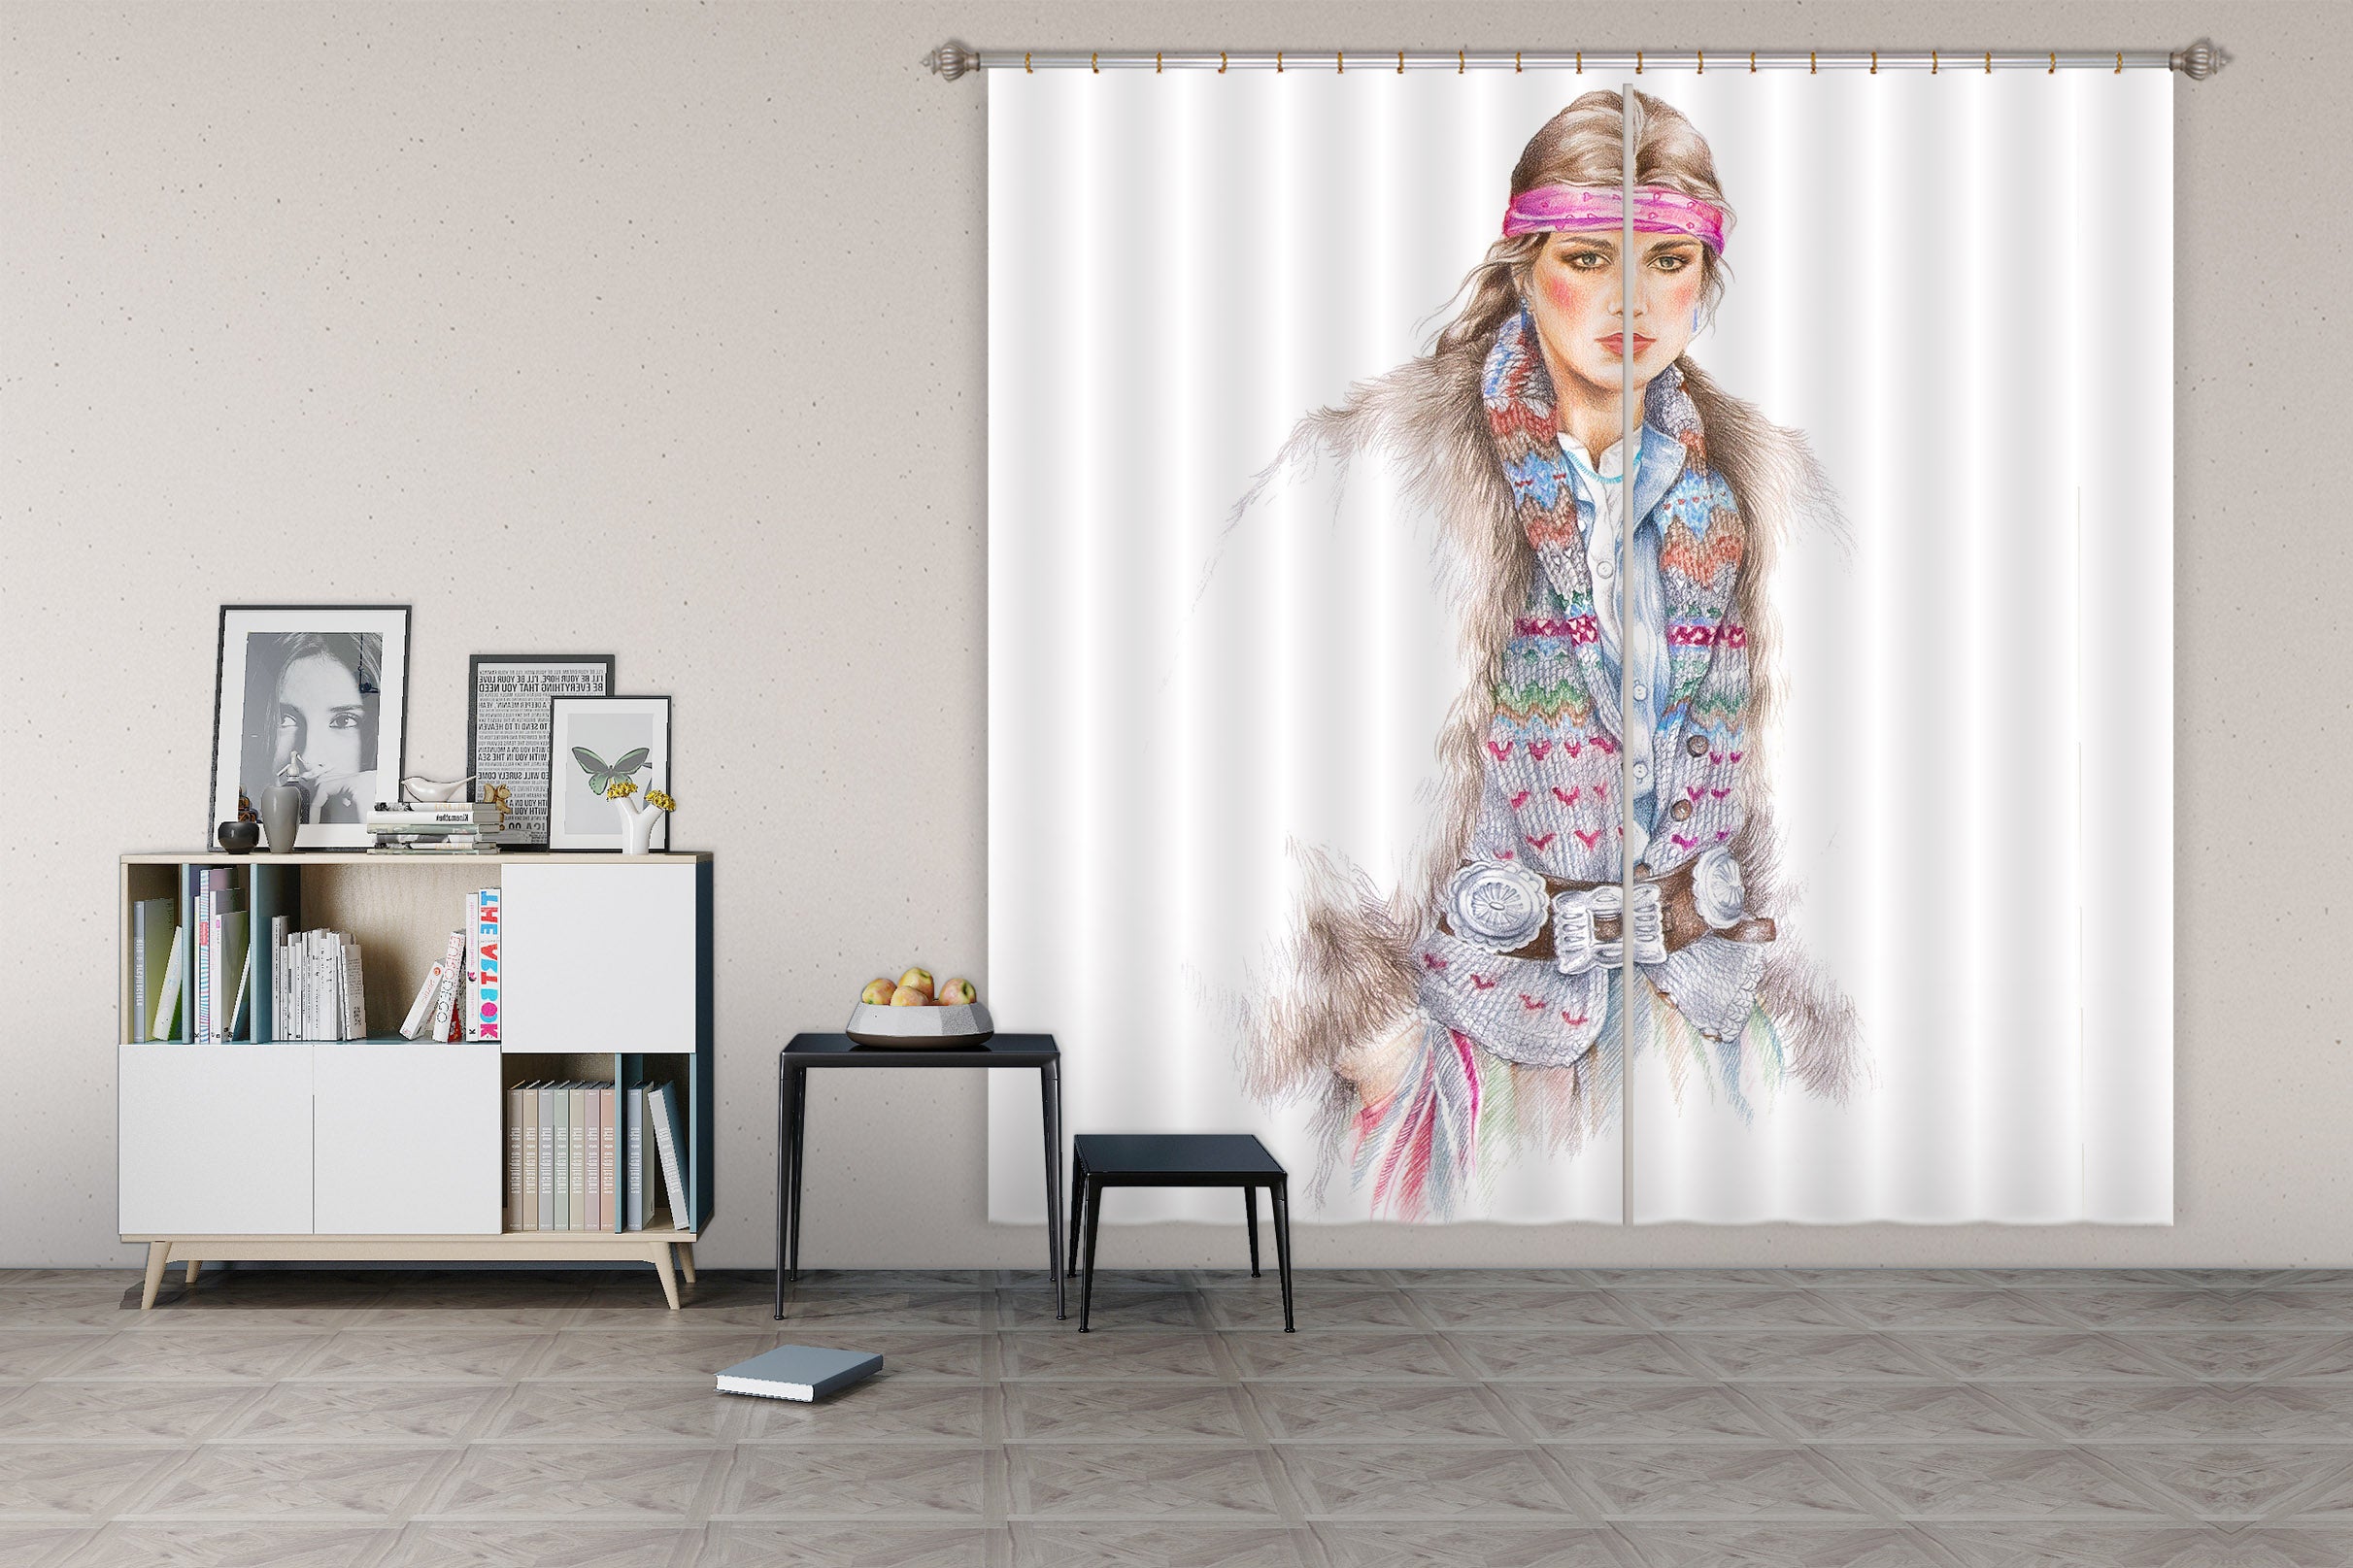 3D Women Coat 3095 Debi Coules Curtain Curtains Drapes